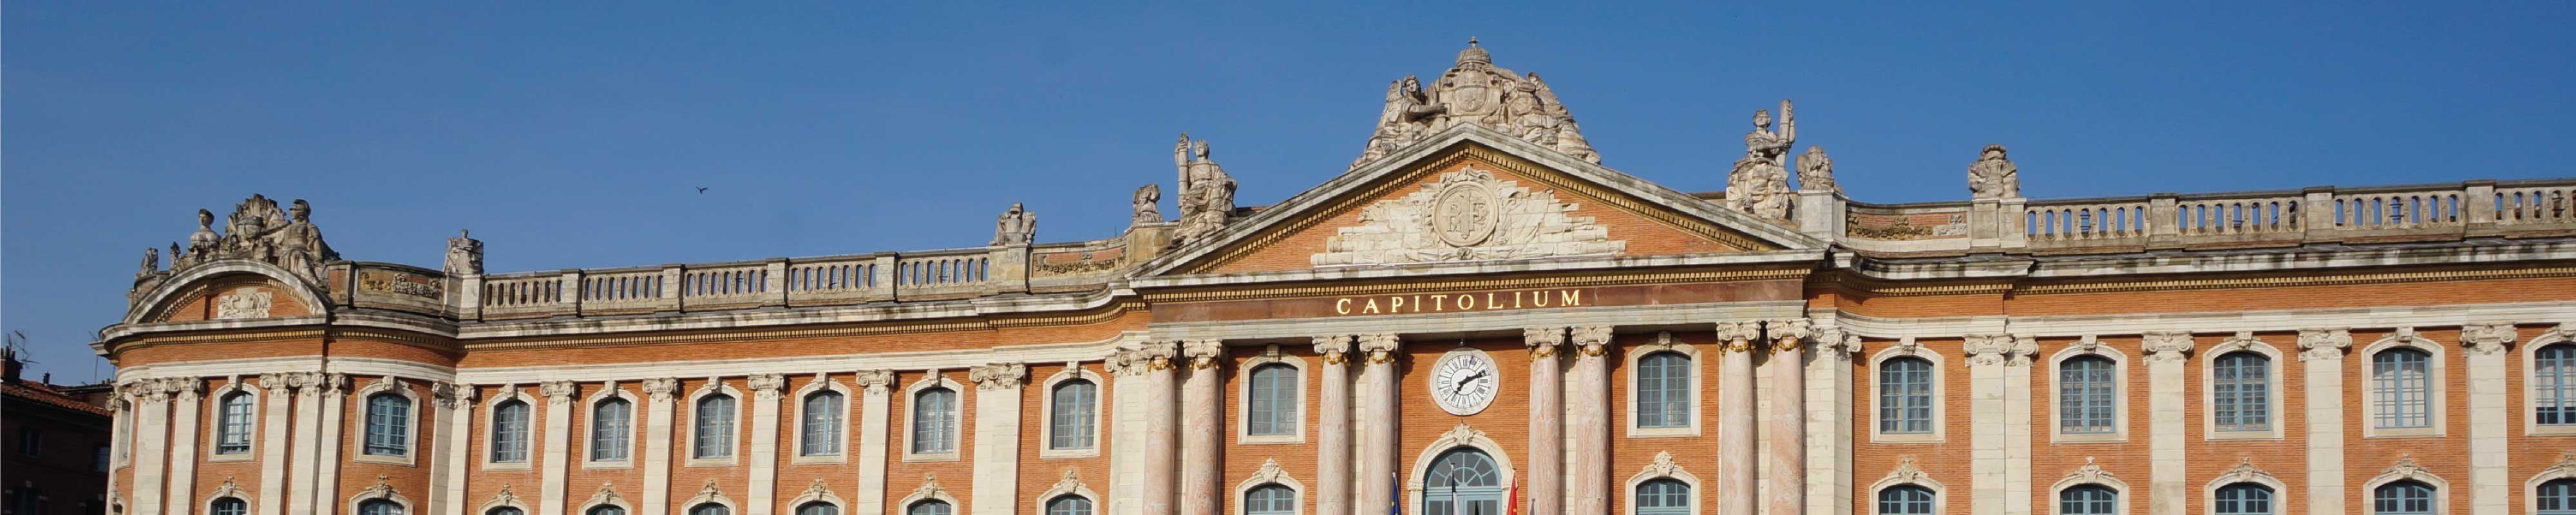 Consigna Equipaje | Capitolio en Toulouse - Nannybag